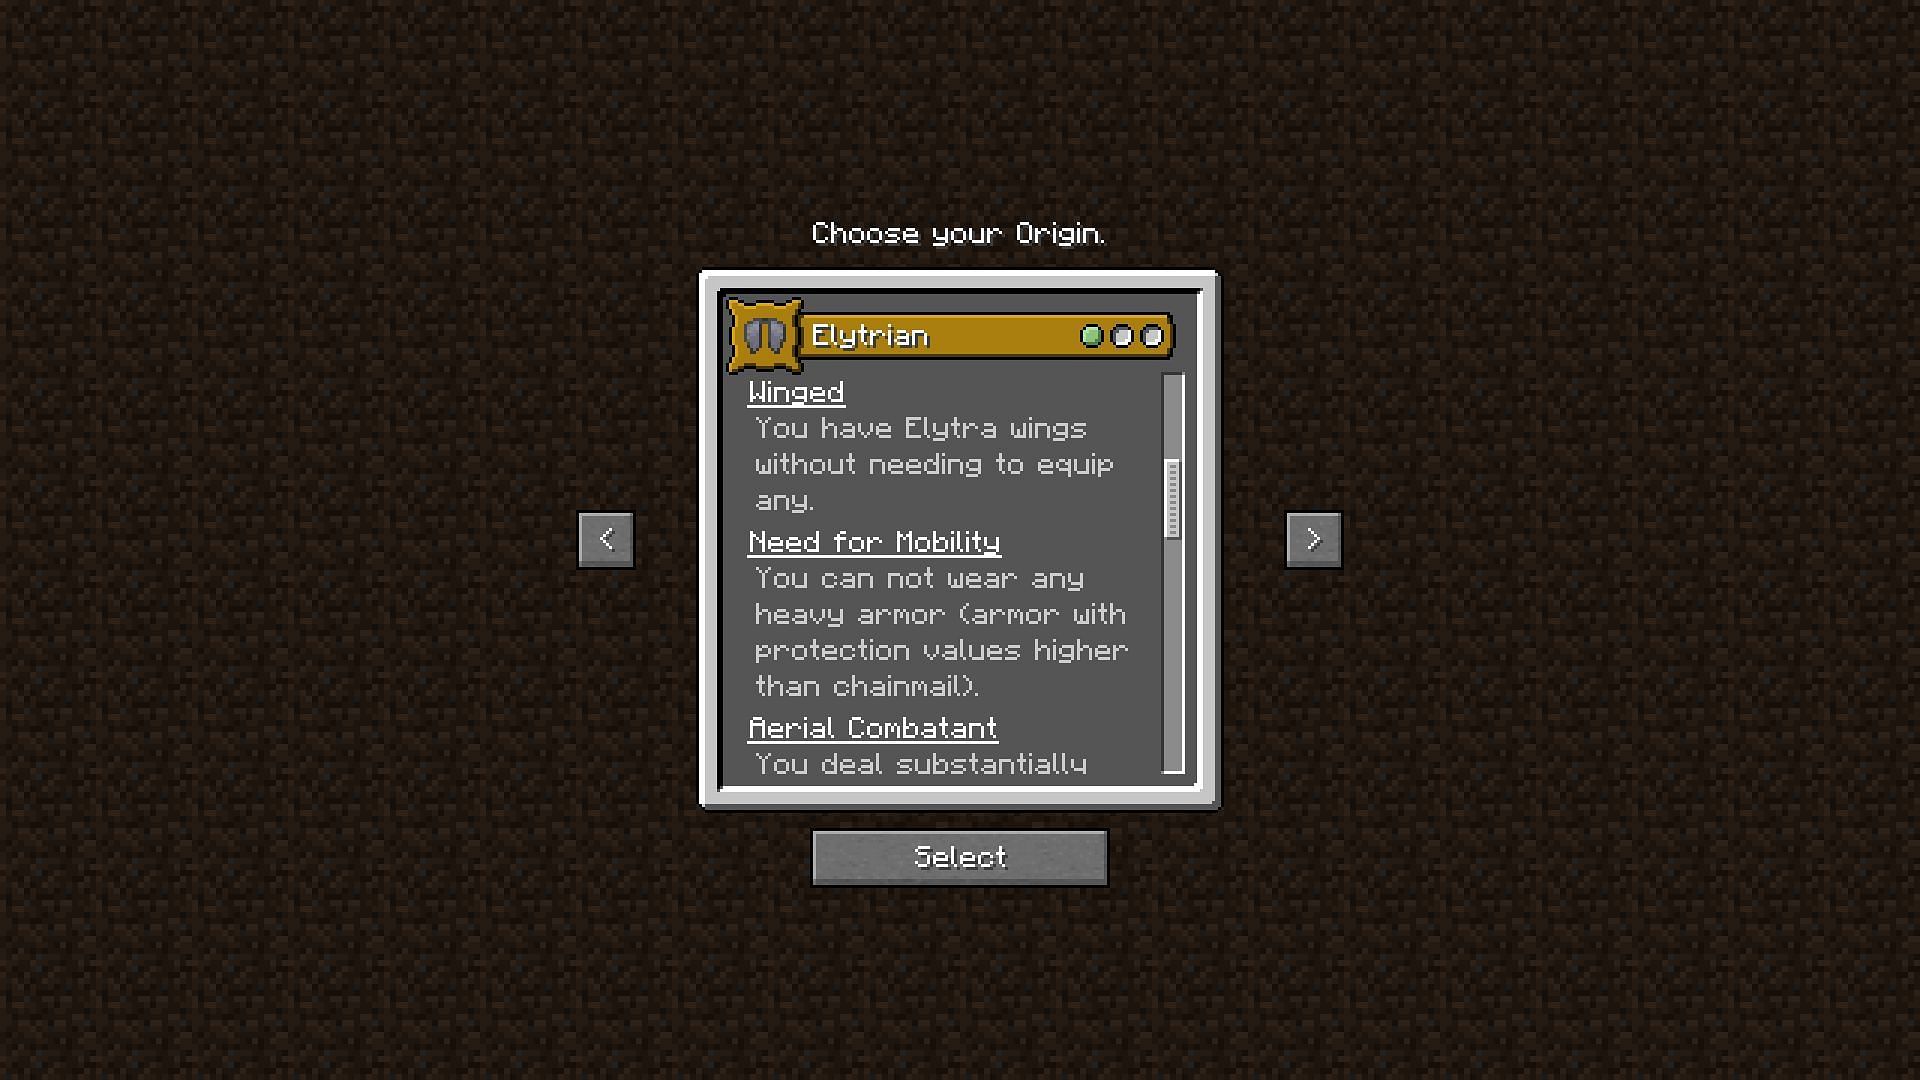 The origin selection screen from the Origins mod (Image via Minecraft)